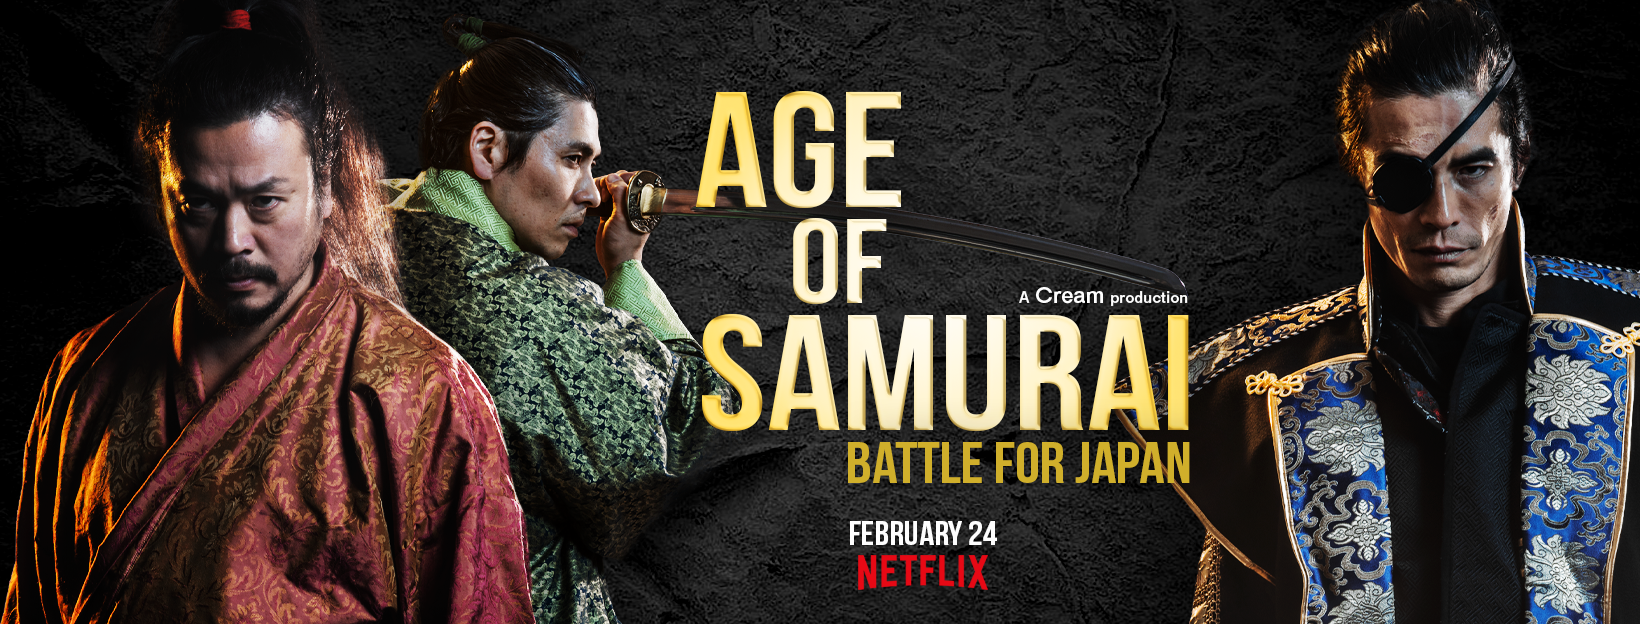 Age of Samurai promotional image